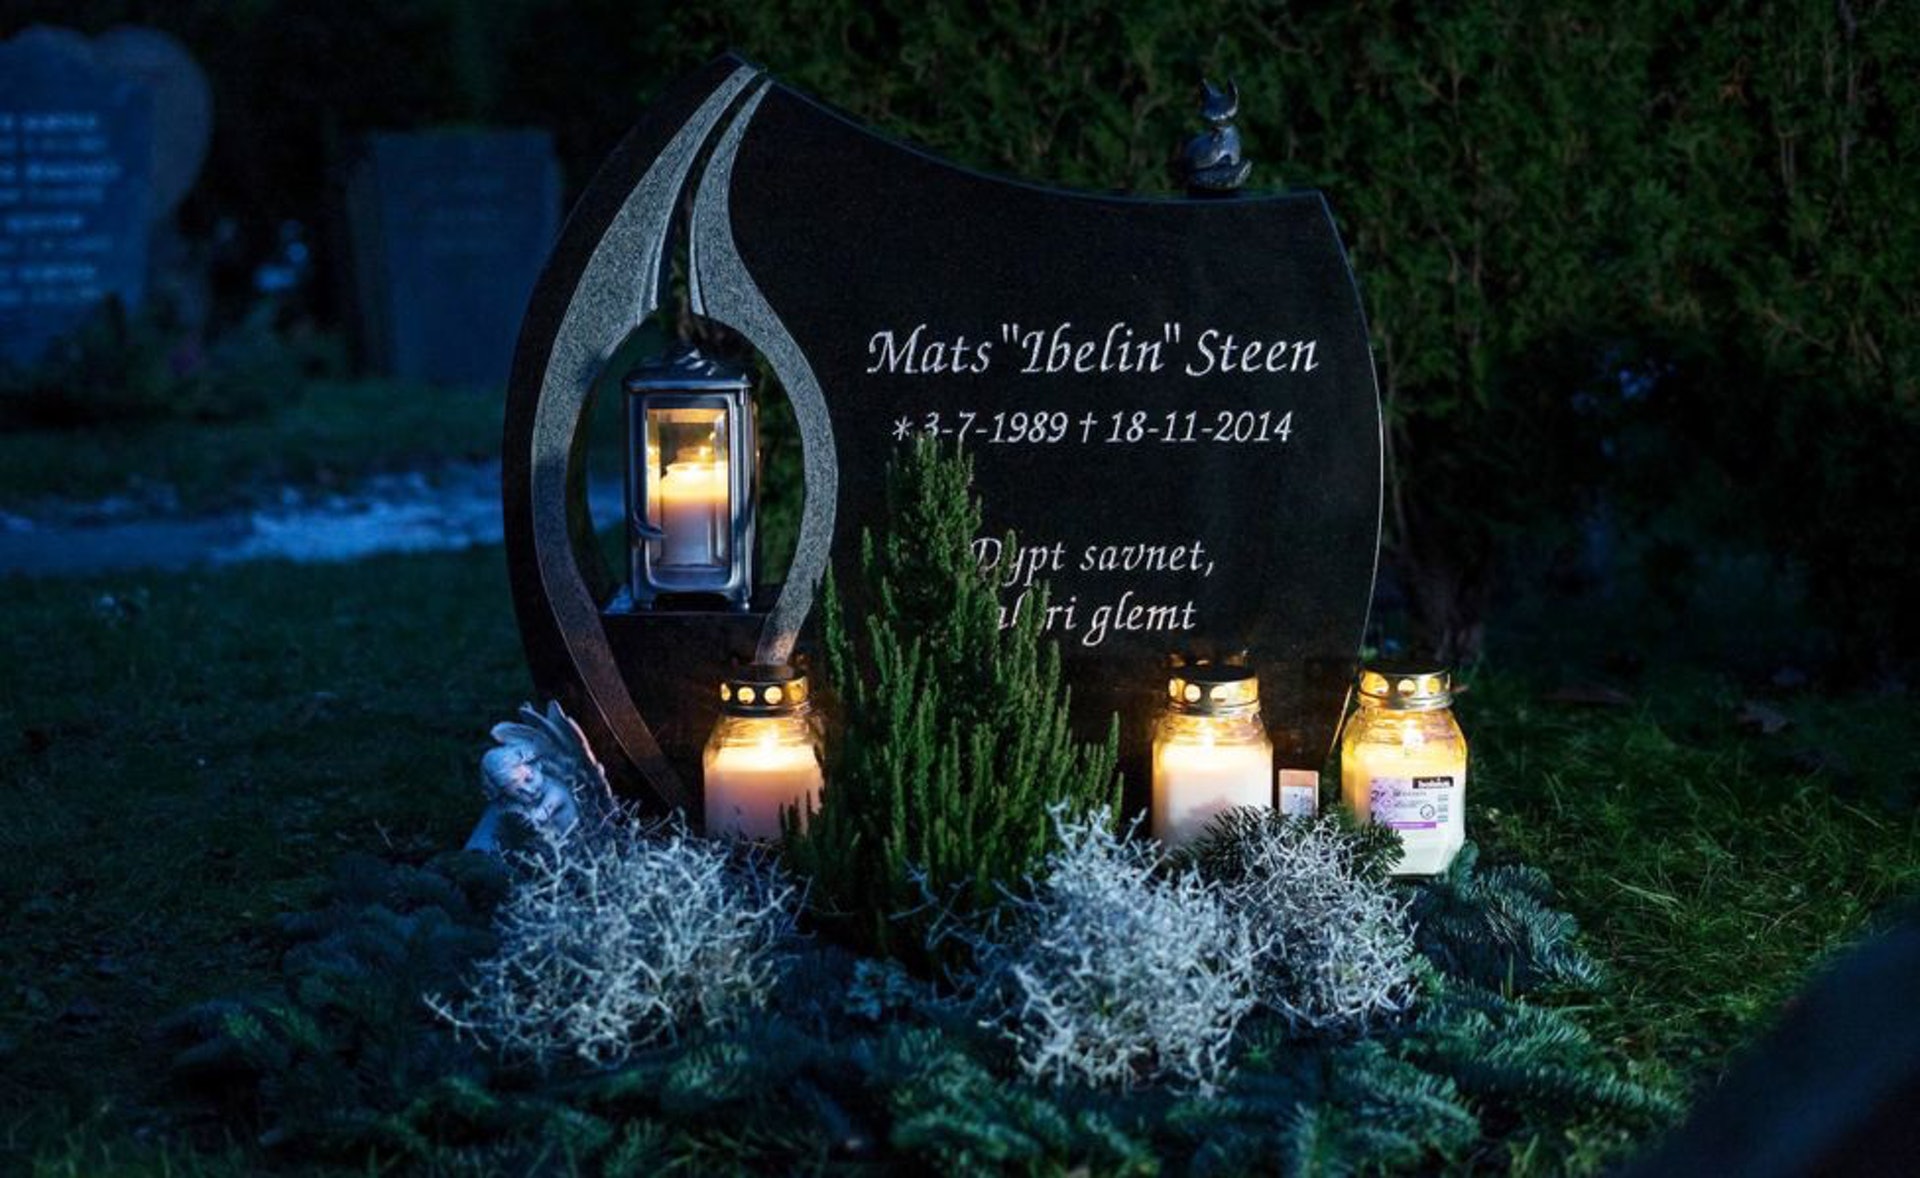 Mats Steen的墓碑，雖然英年早逝，但其友愛精神永存於一眾公會機友心中。